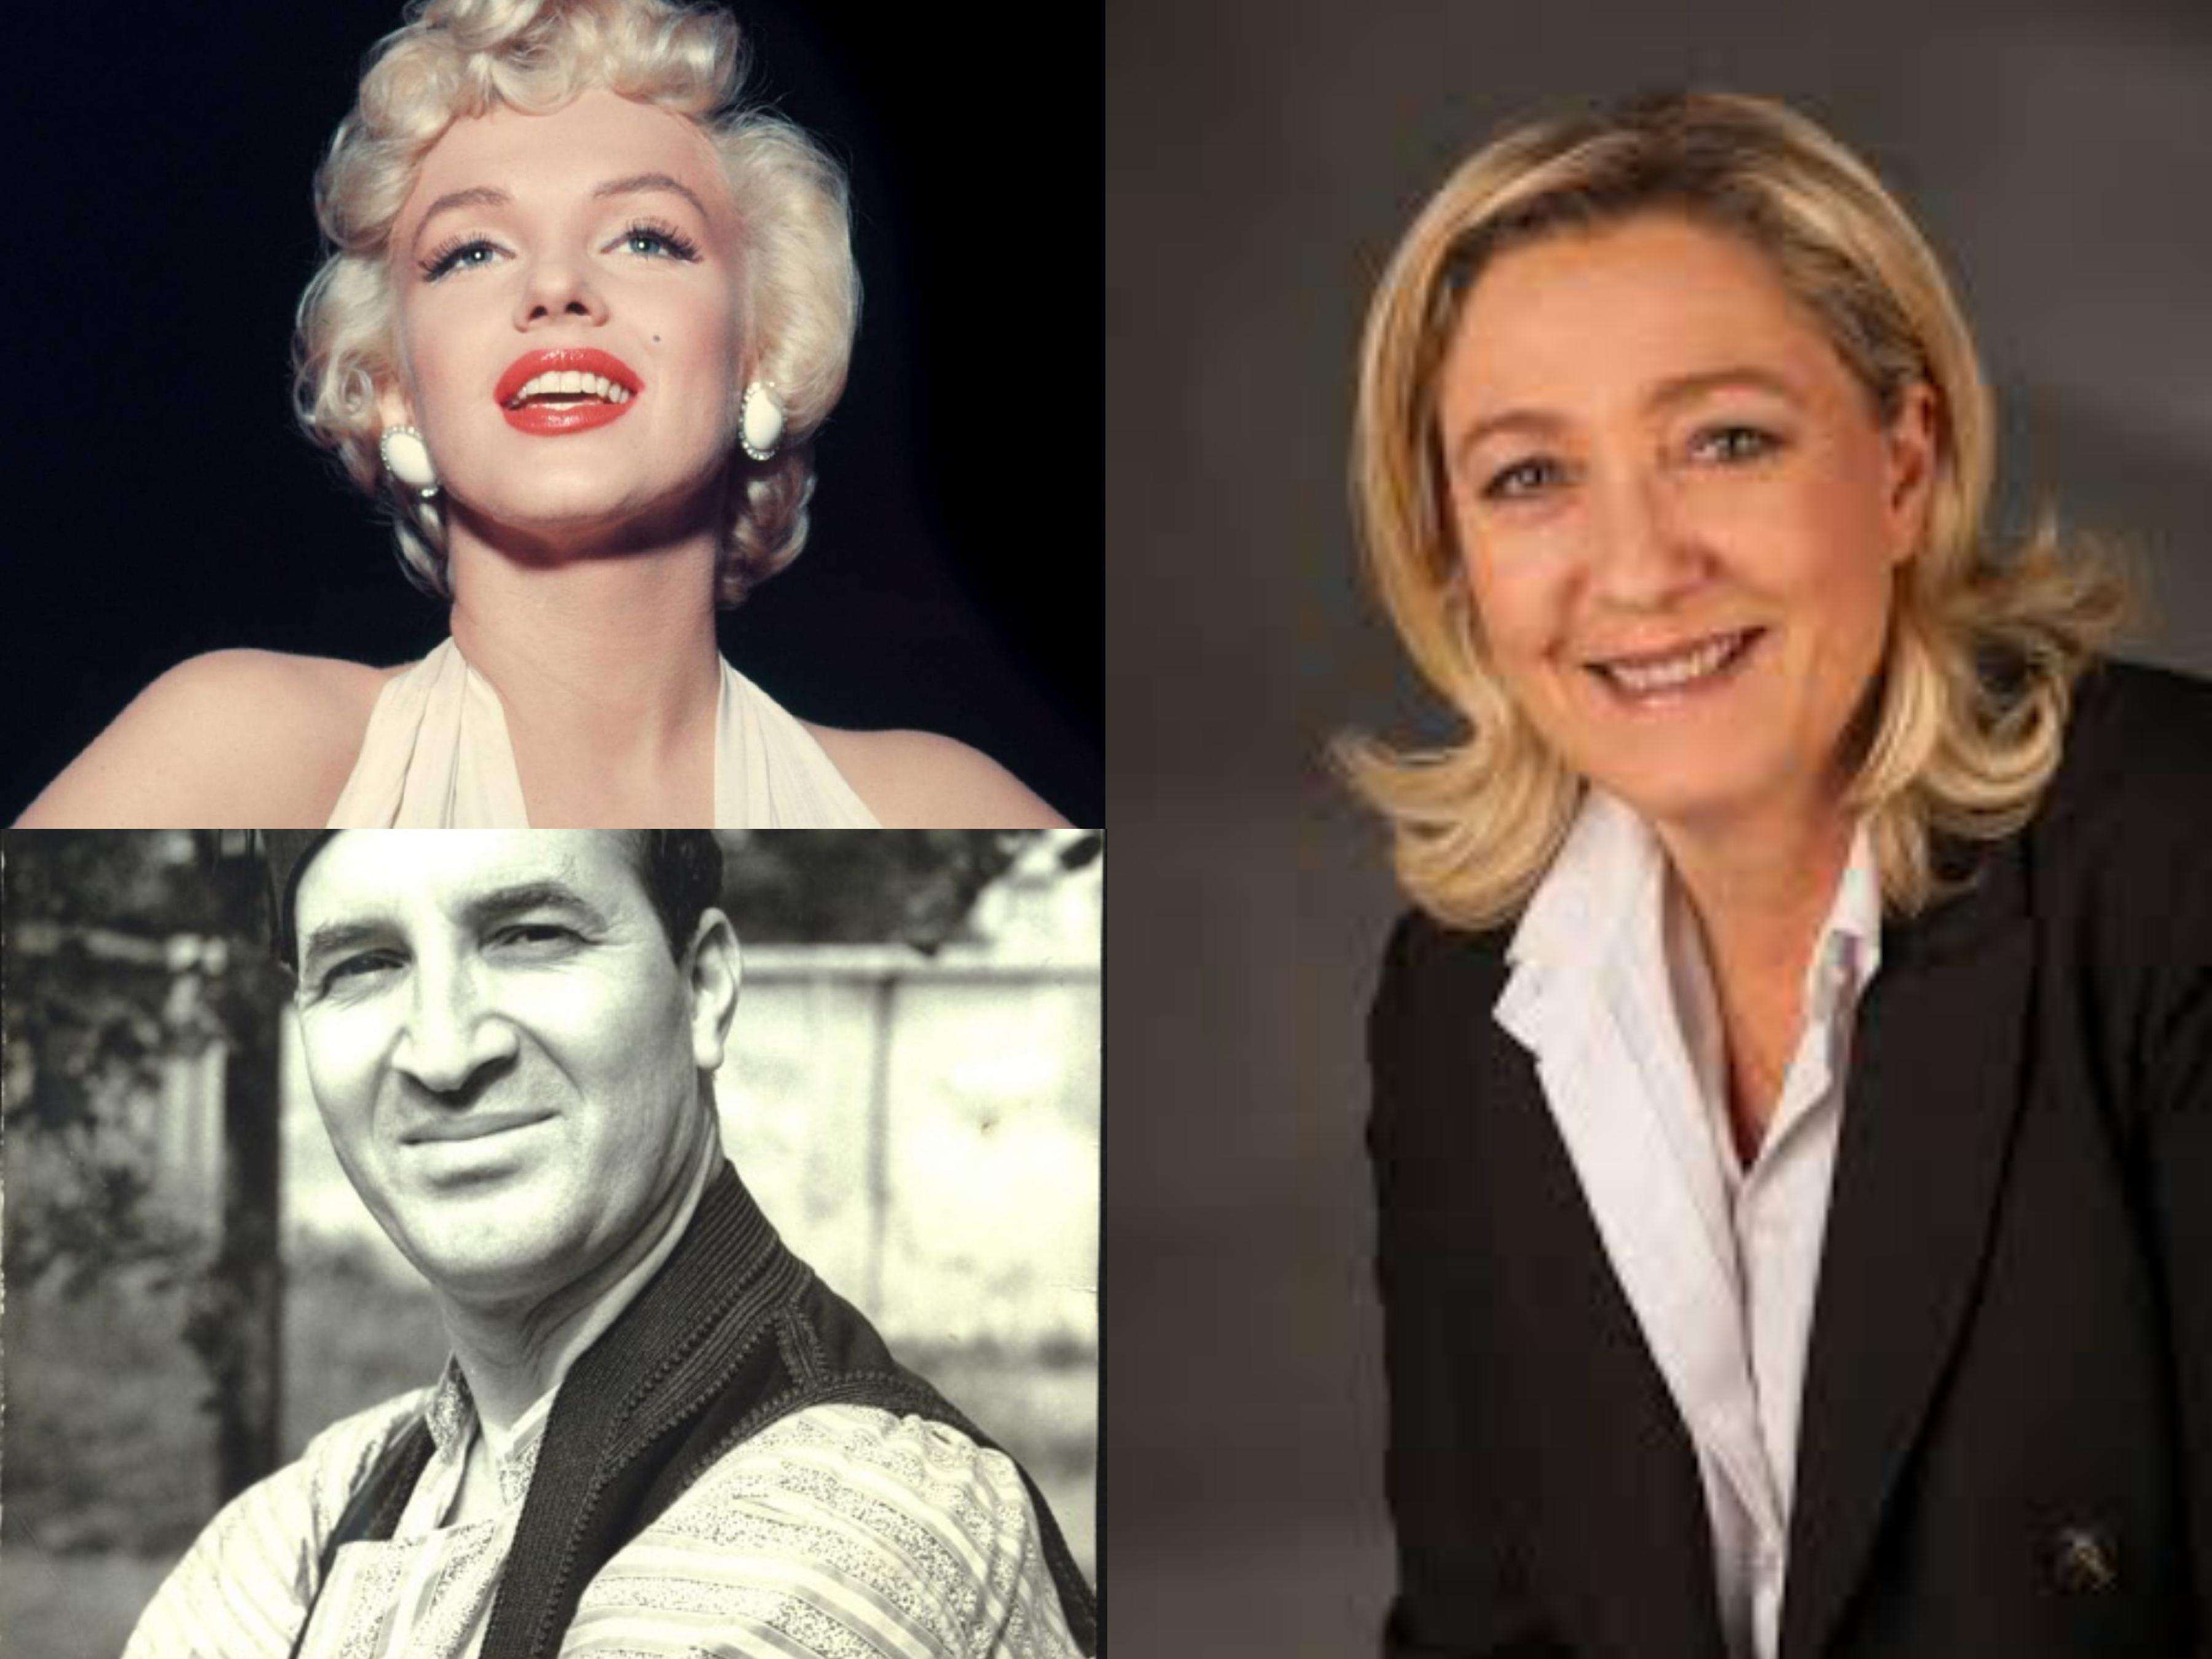 Umrli Himzo Polovina i Merlin Monro, a rođendan Le Pen